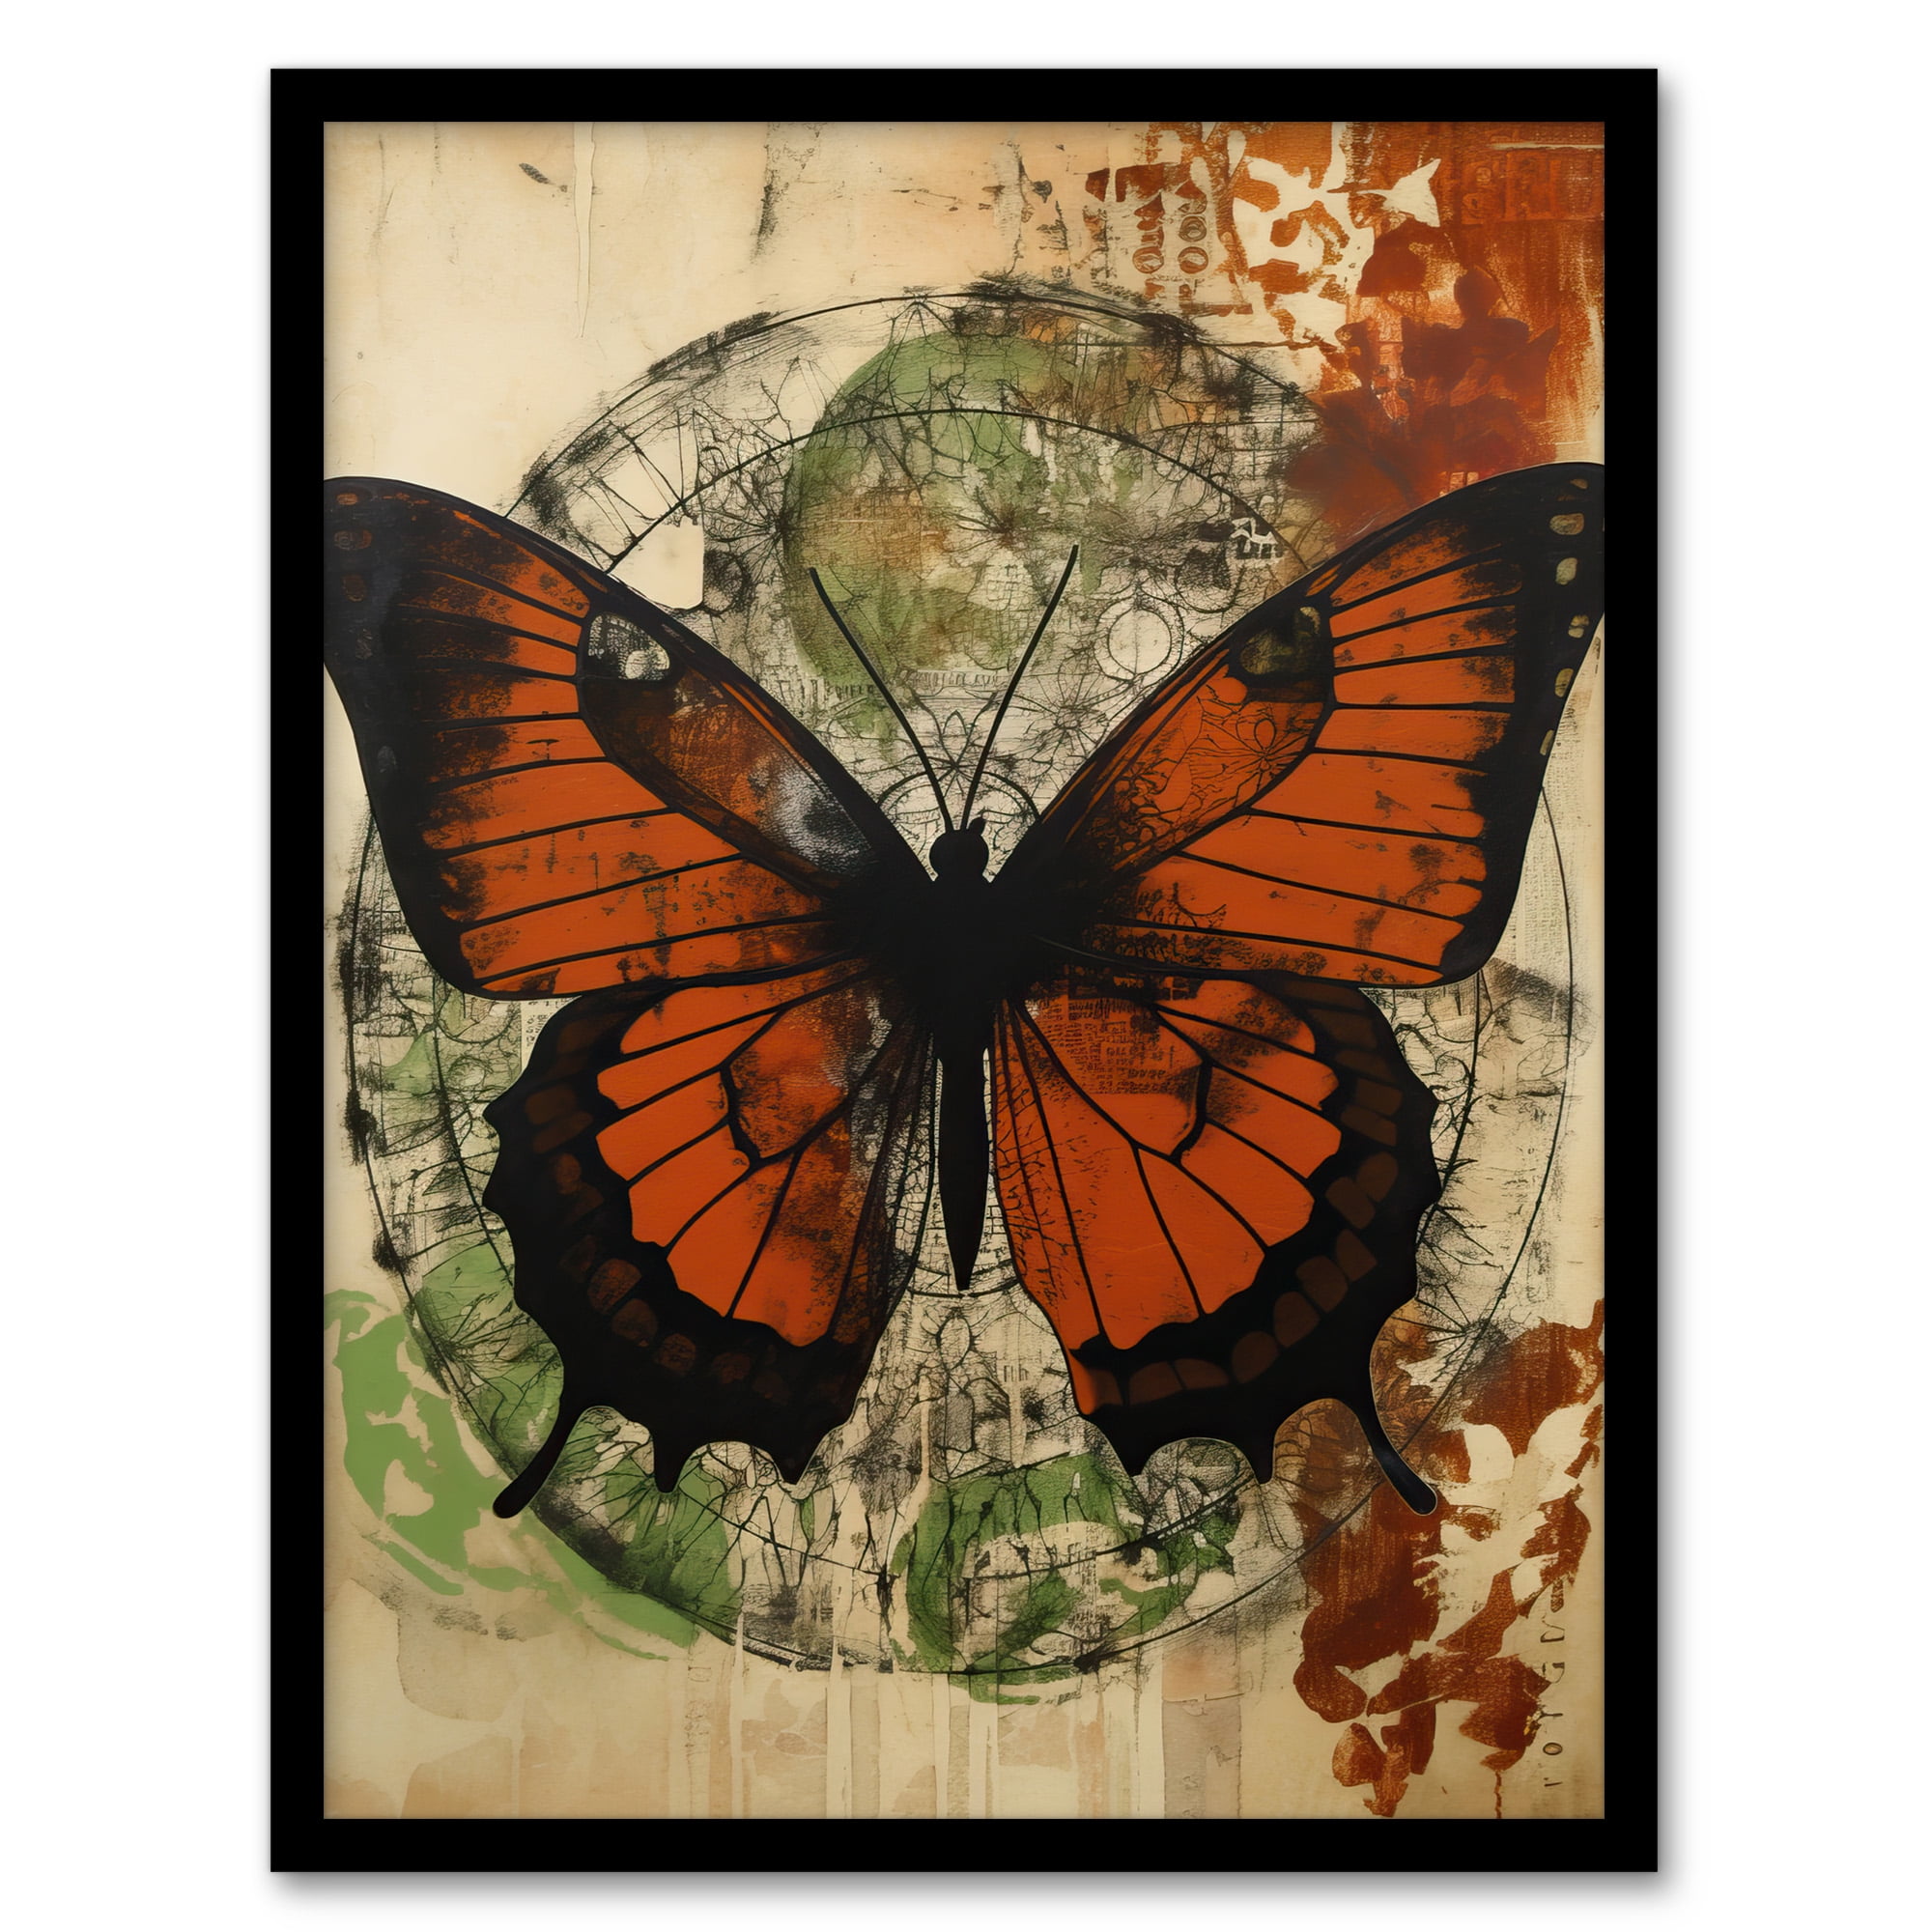 Monarch Butterfly, Vintage Butterfly